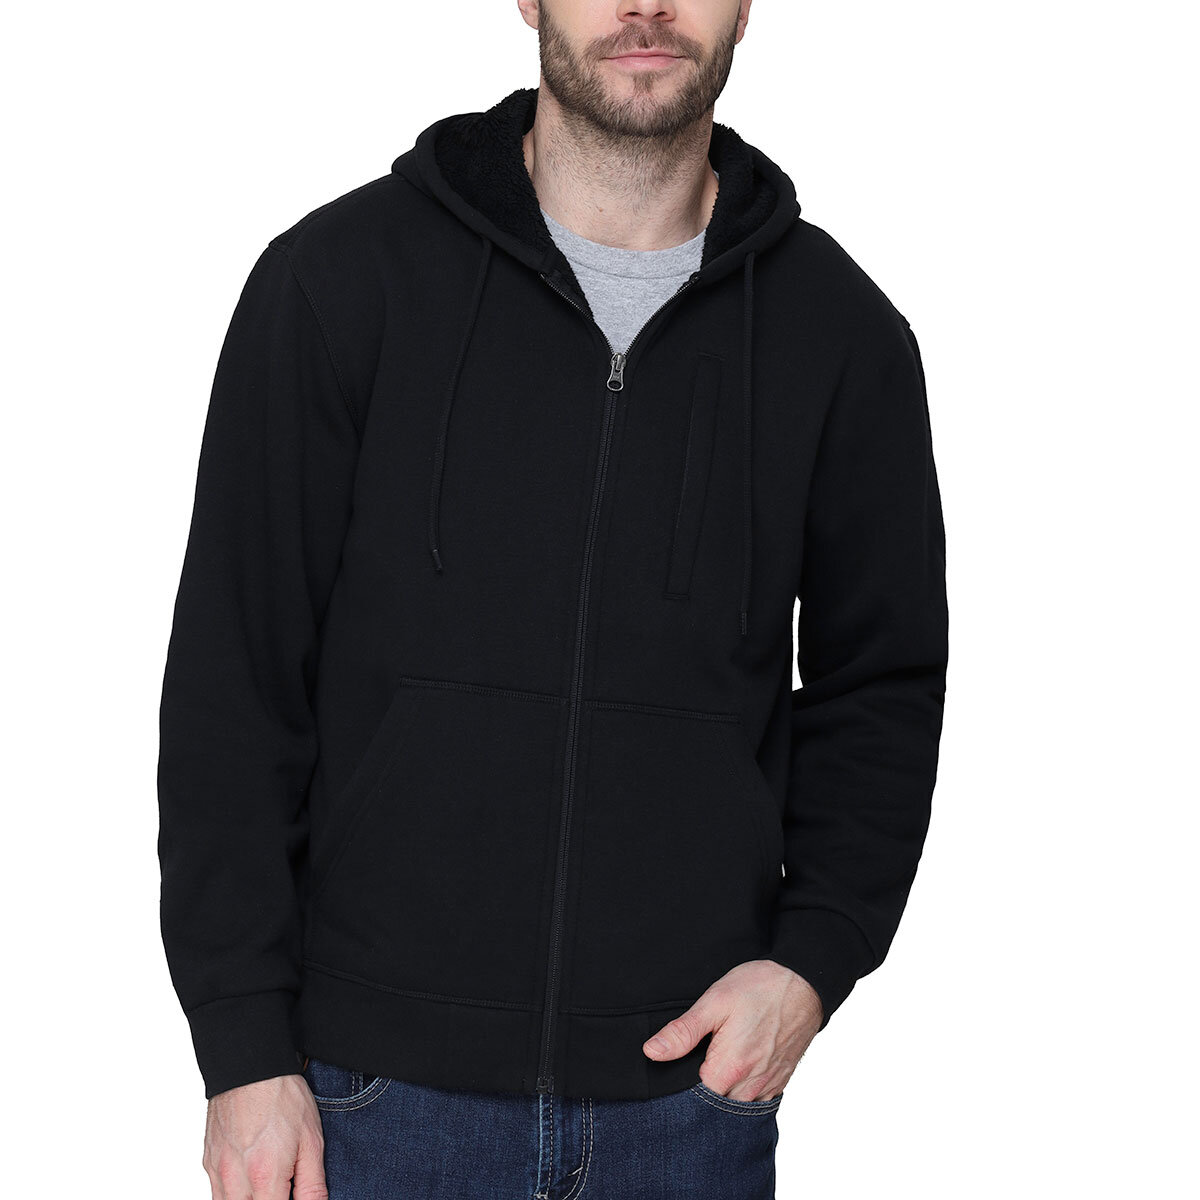 BC Clothing Fleece Lined Hoody in Black | Costco UK